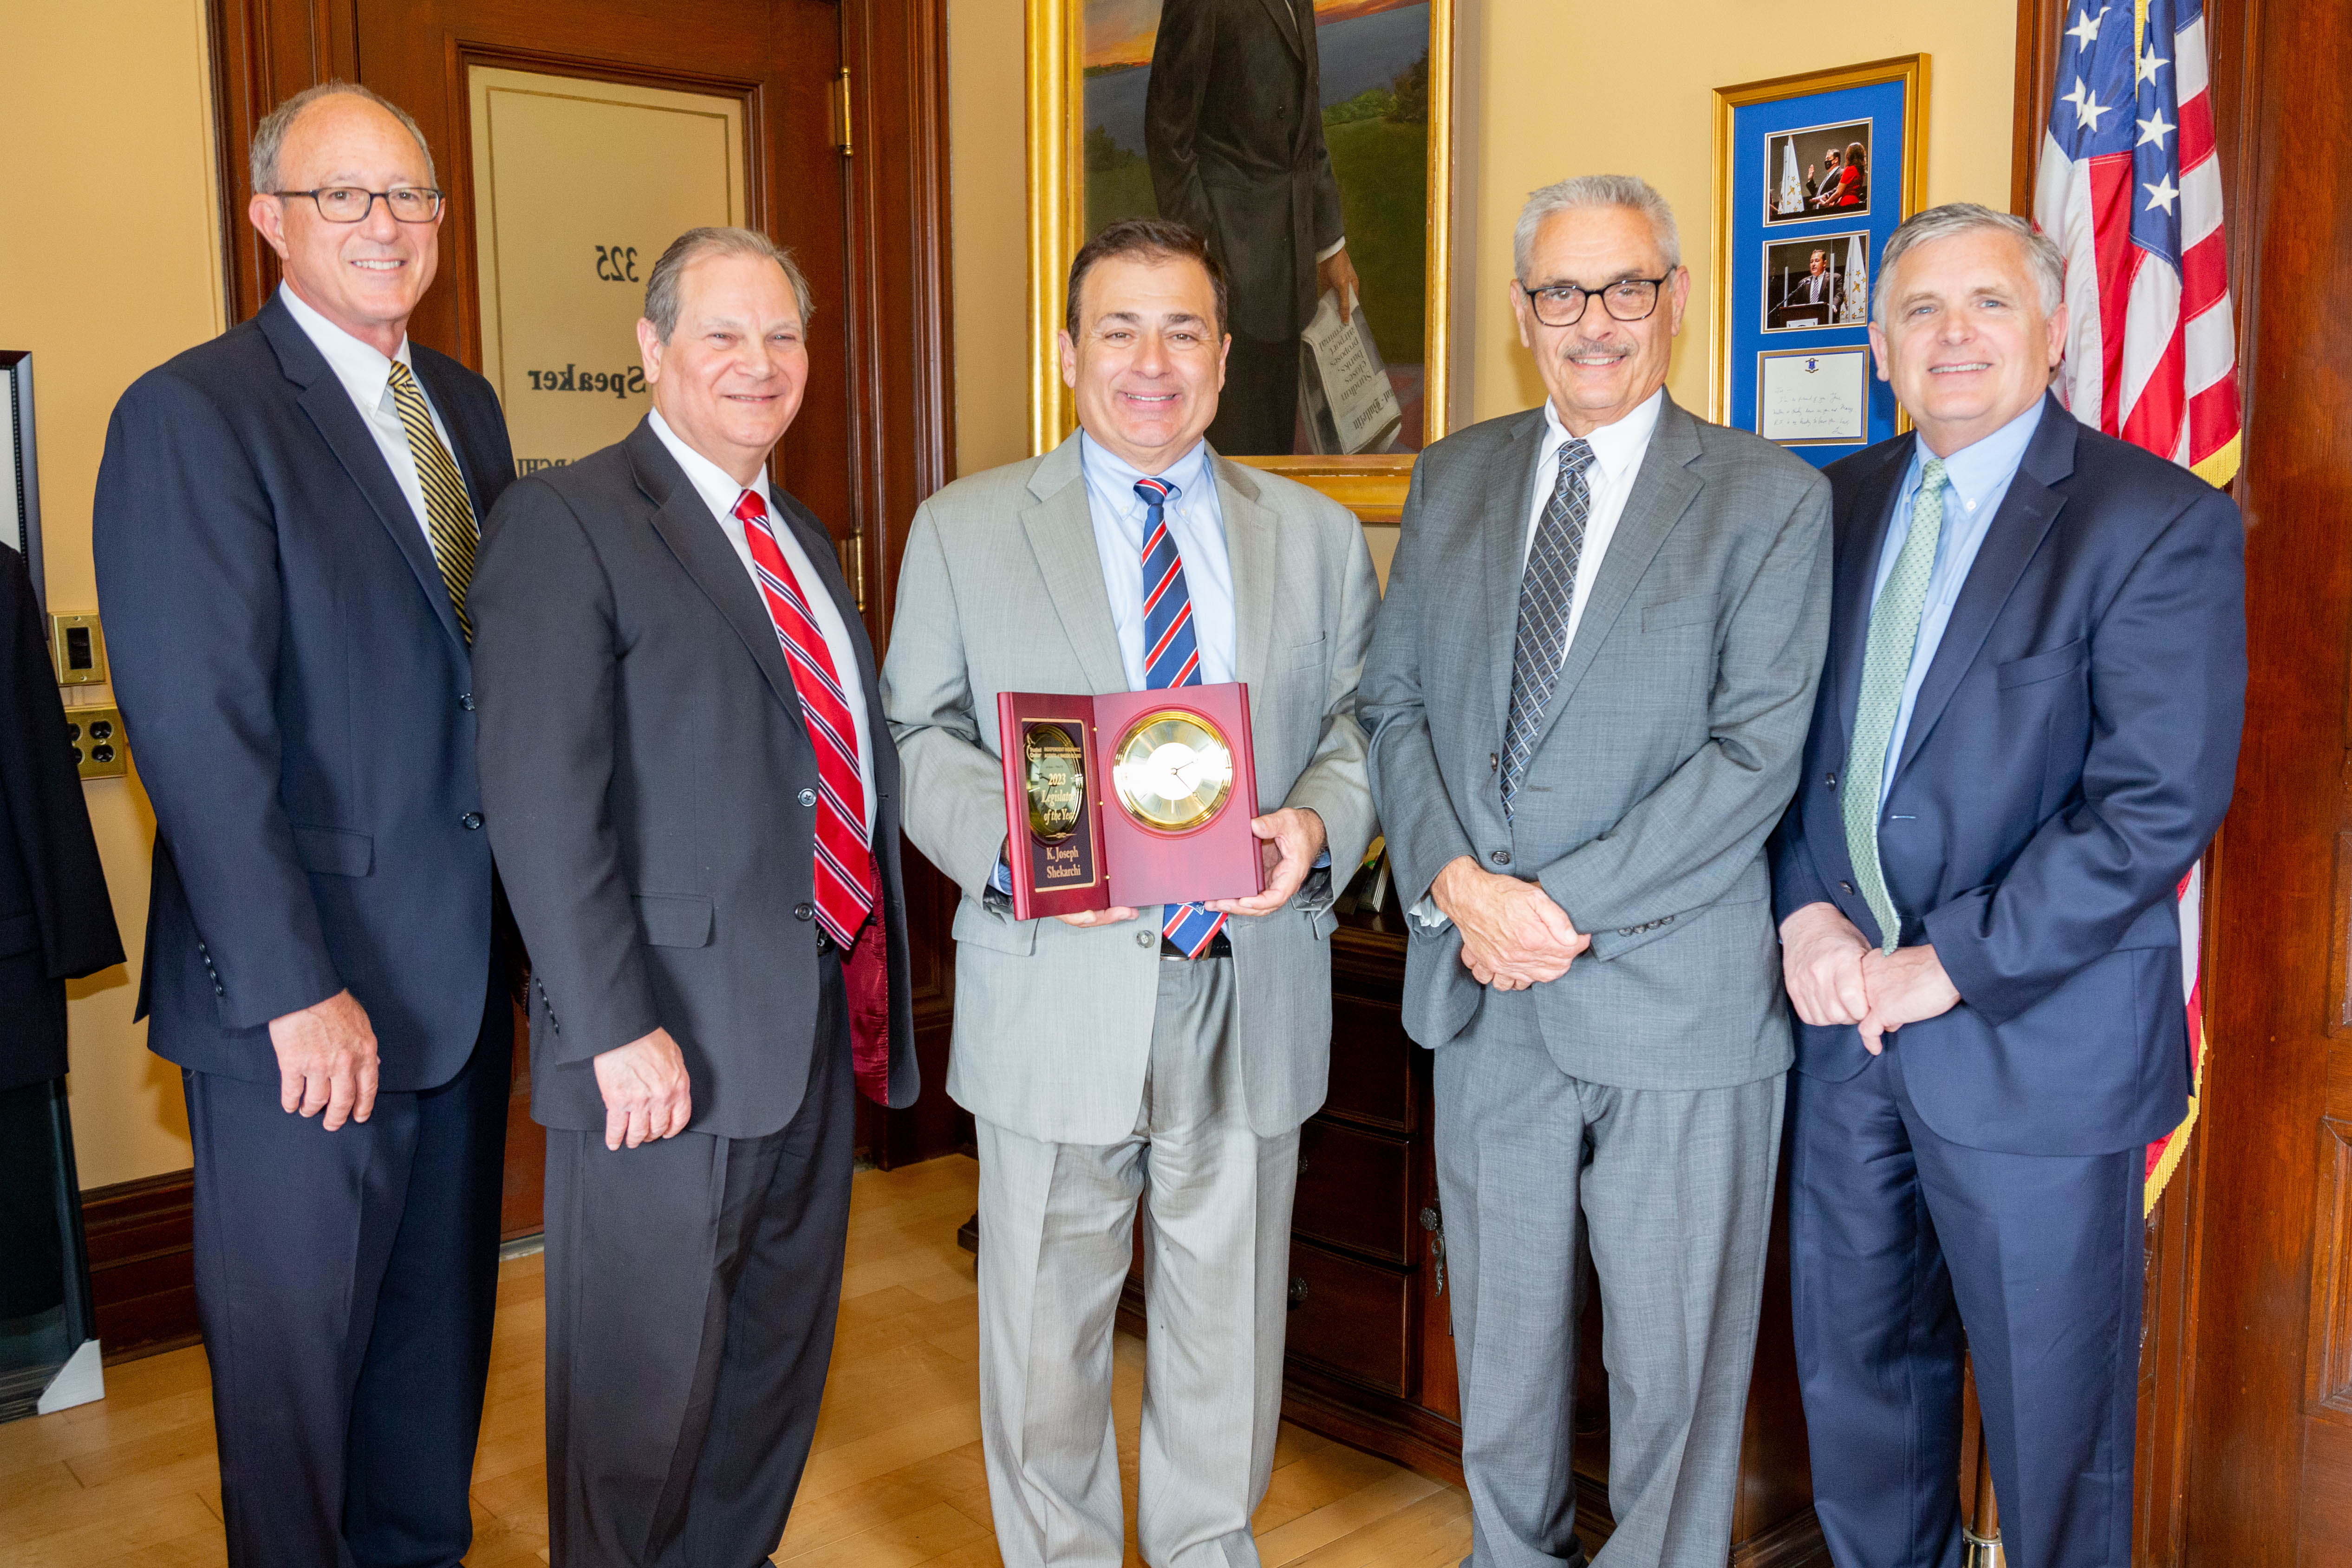 Member of IIARI's board presented the "Legislator of the Year" award to K. Joseph Shekarchi, the Speaker of the Rhode Island.jpg